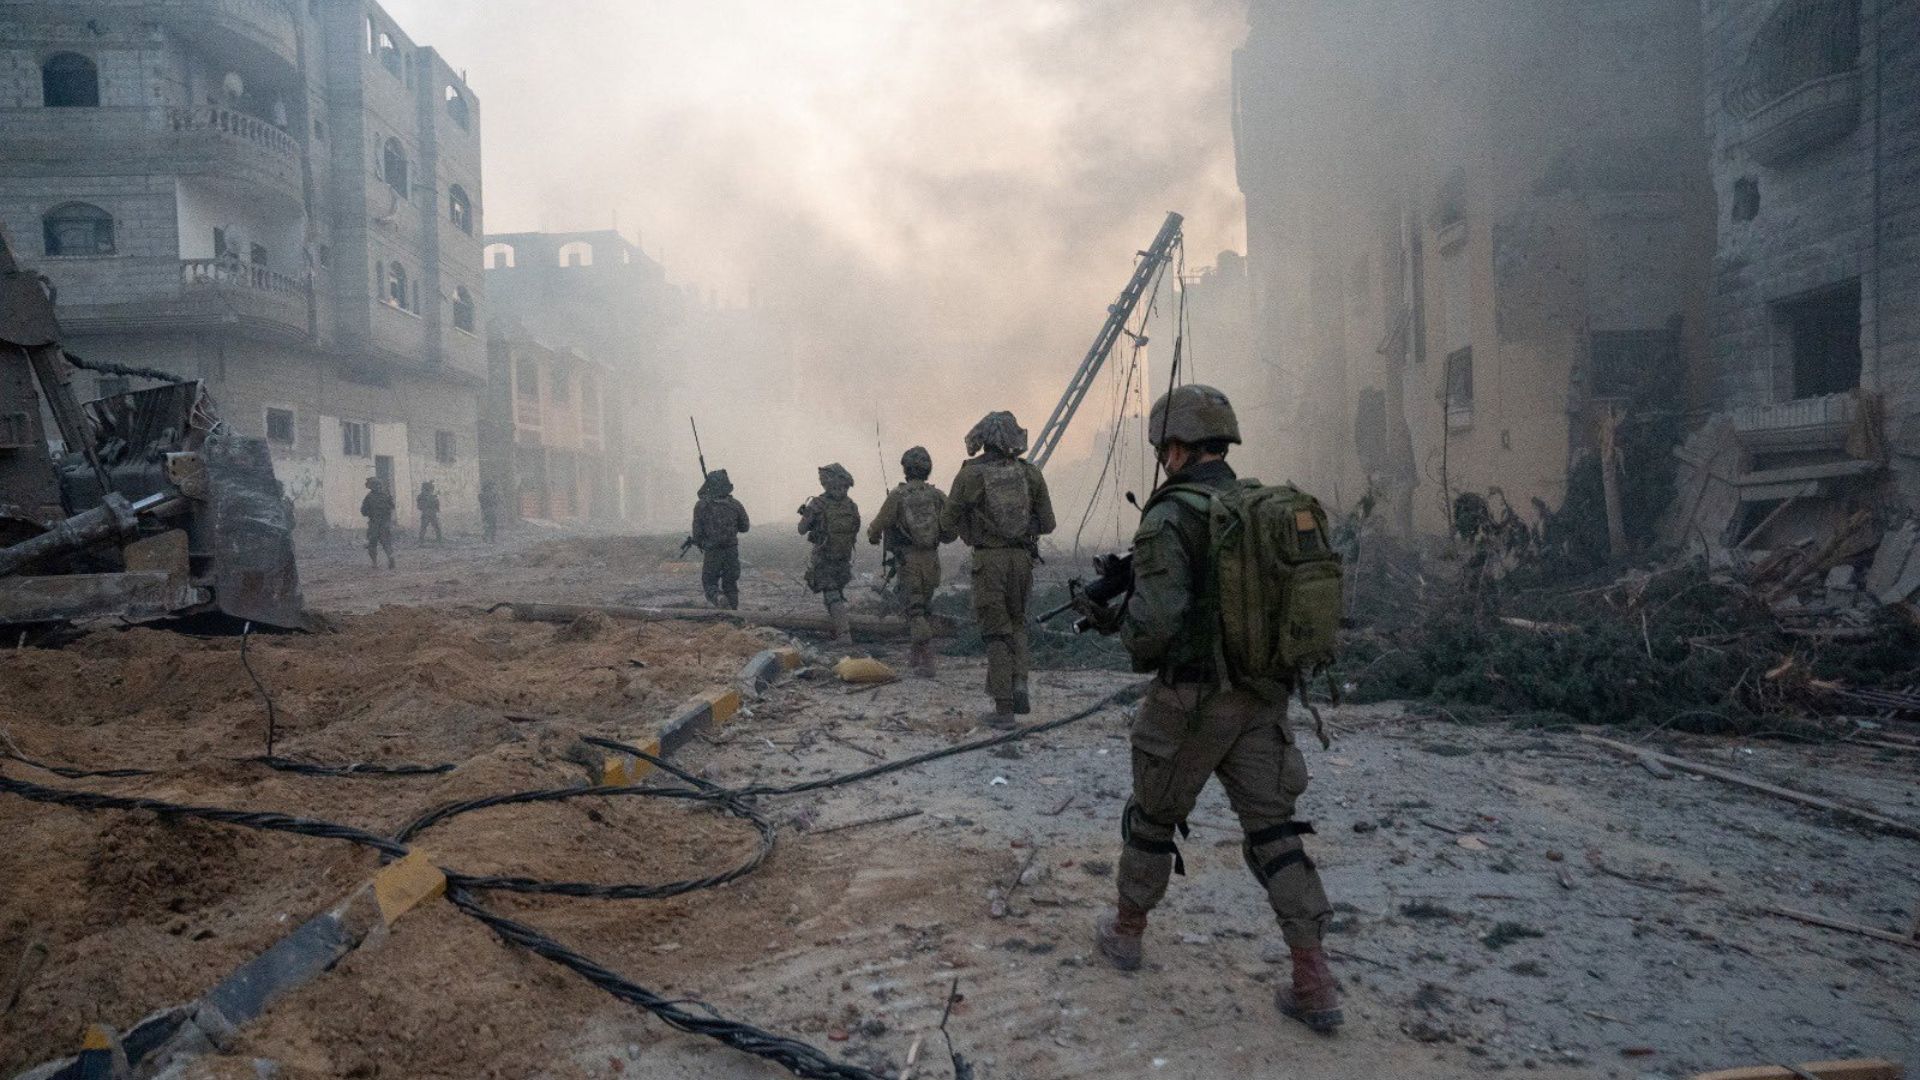 Israeli soldiers operating in the Gaza Strip. /IDF via Reuters